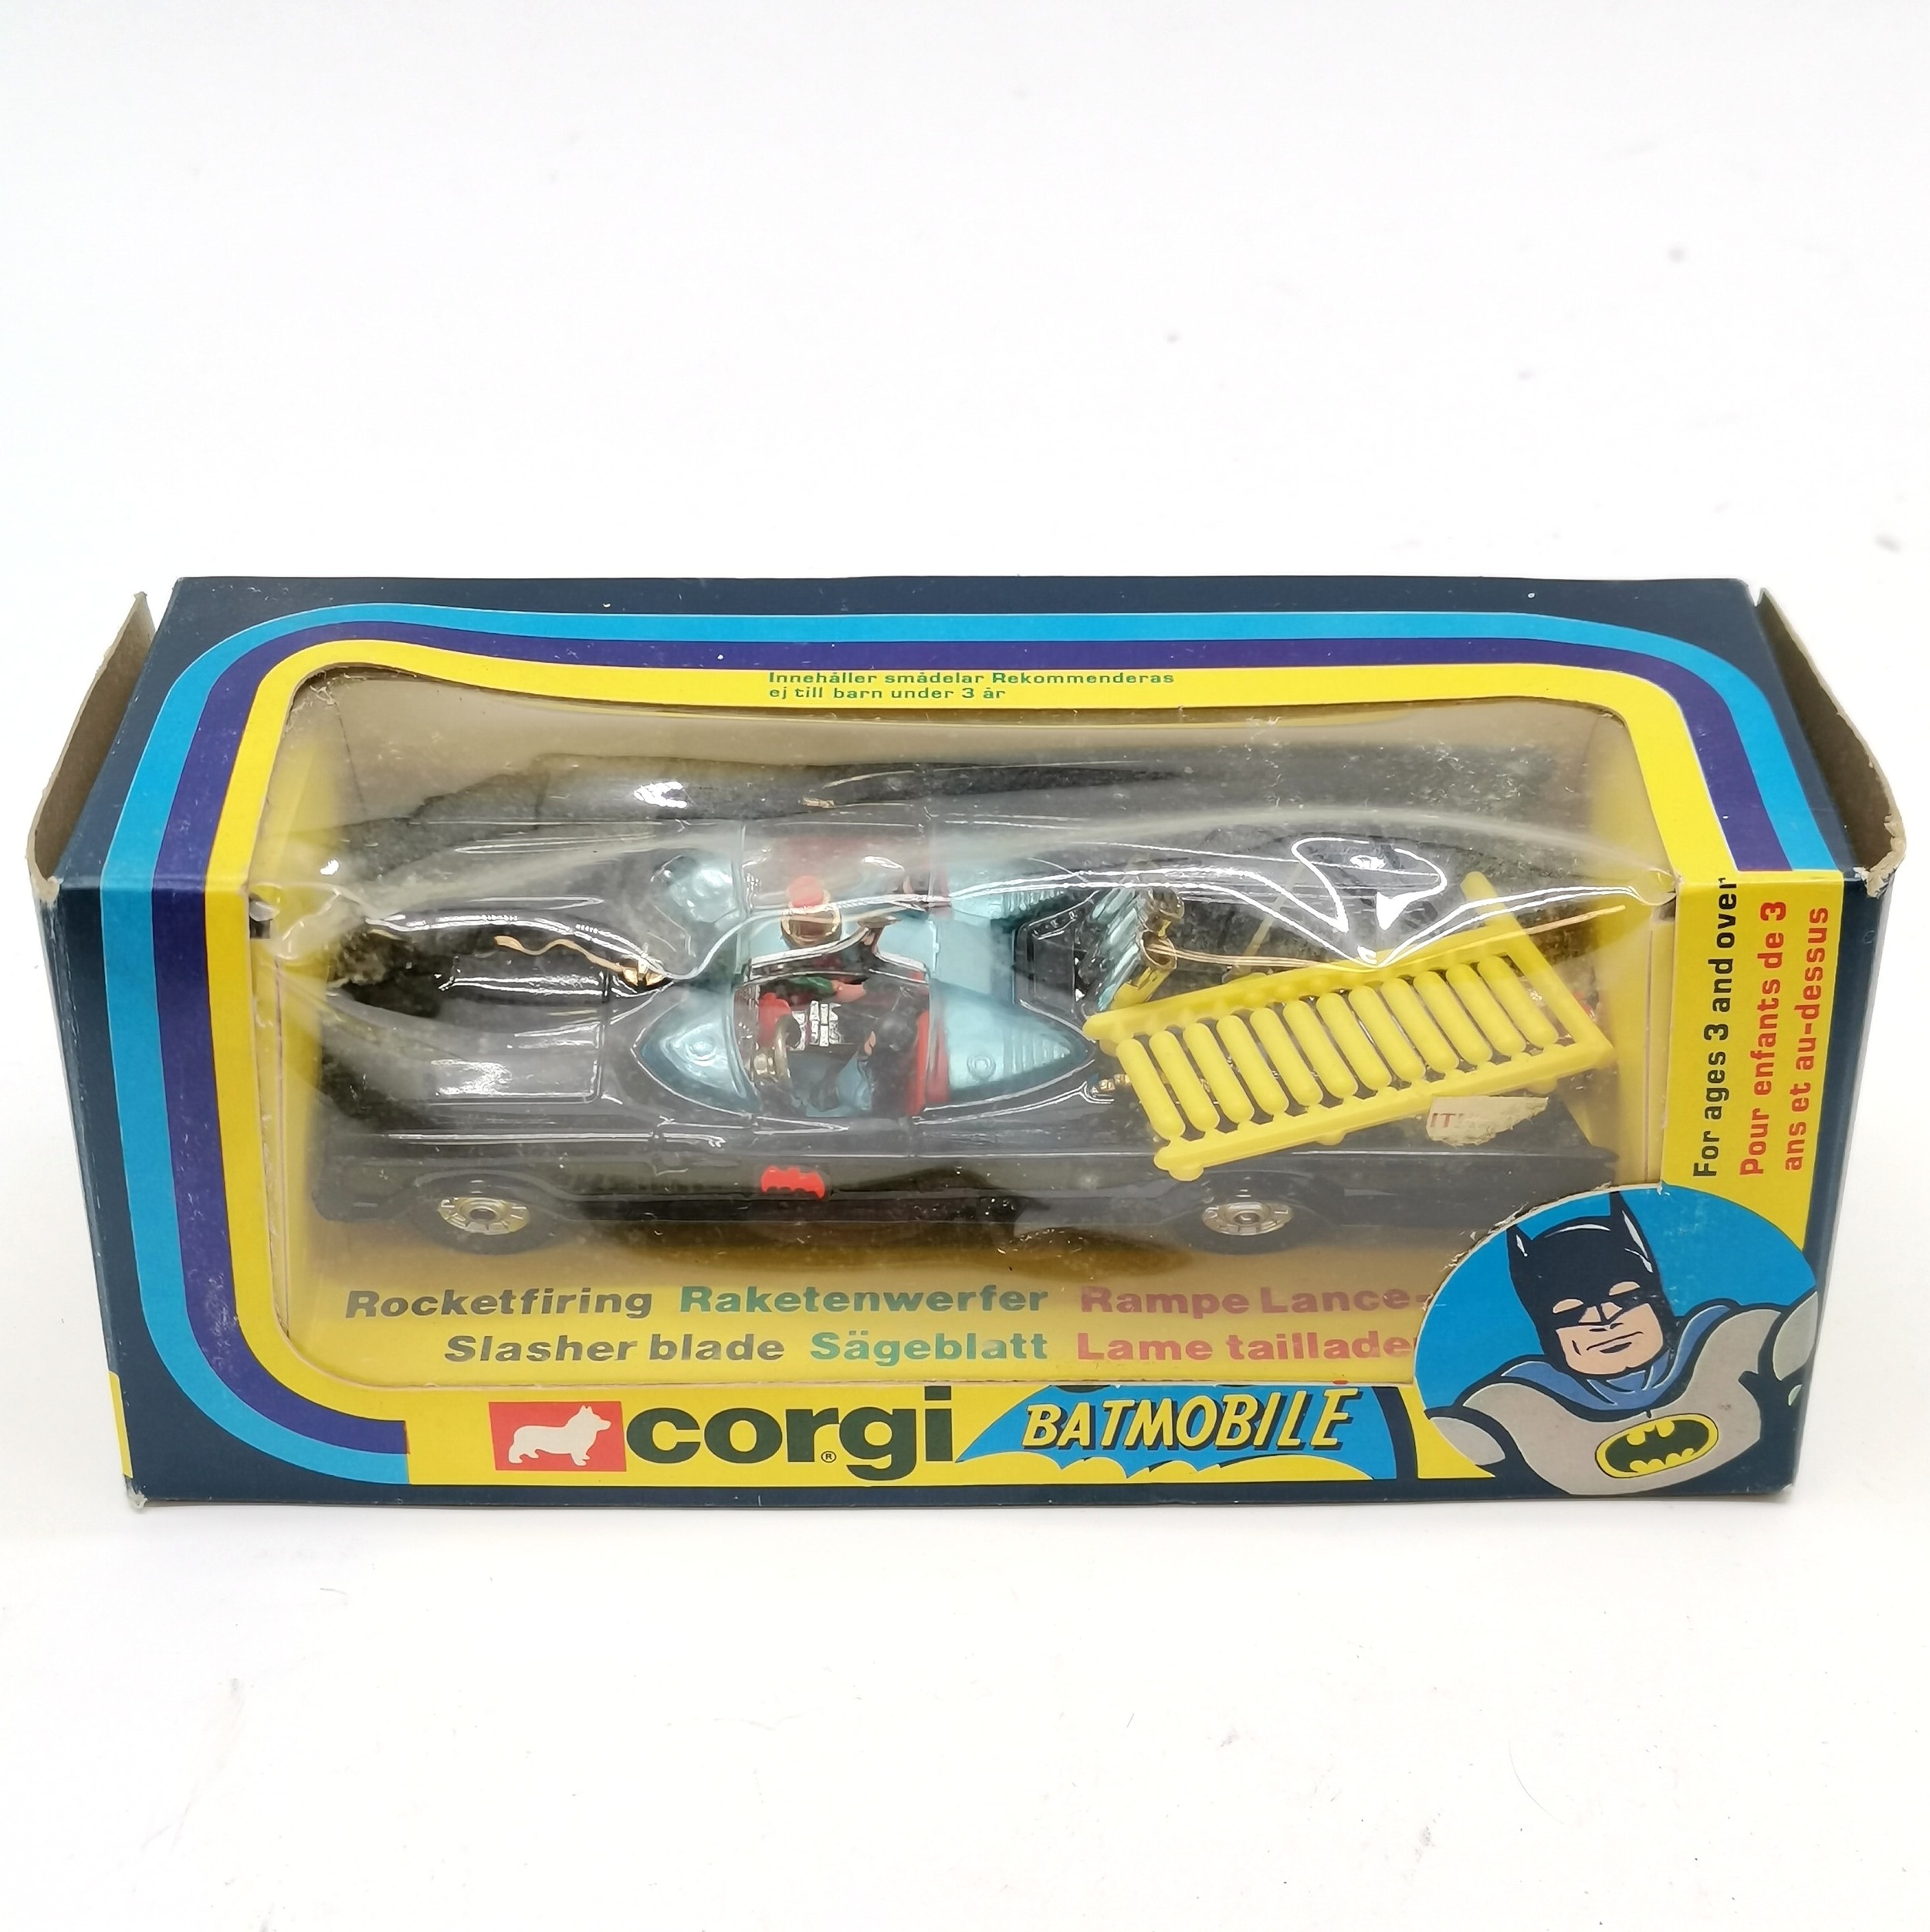 Vintage 1976 Corgi 267 Batmobile in original box with both figurines - Batmobile in very good